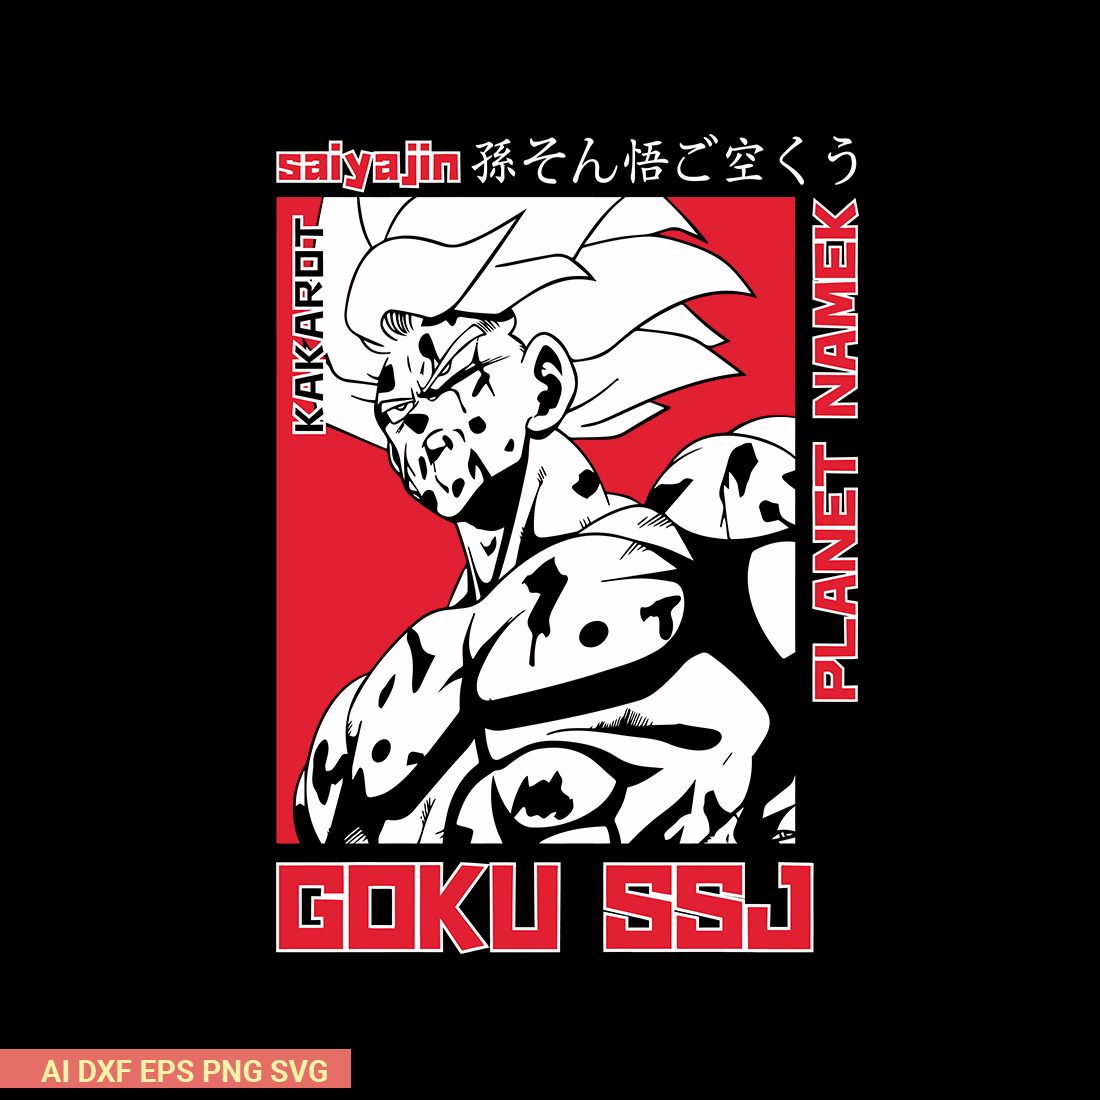 Goku ssj Svg, Anime Svg, Dragon Ball Z Svg preview image.